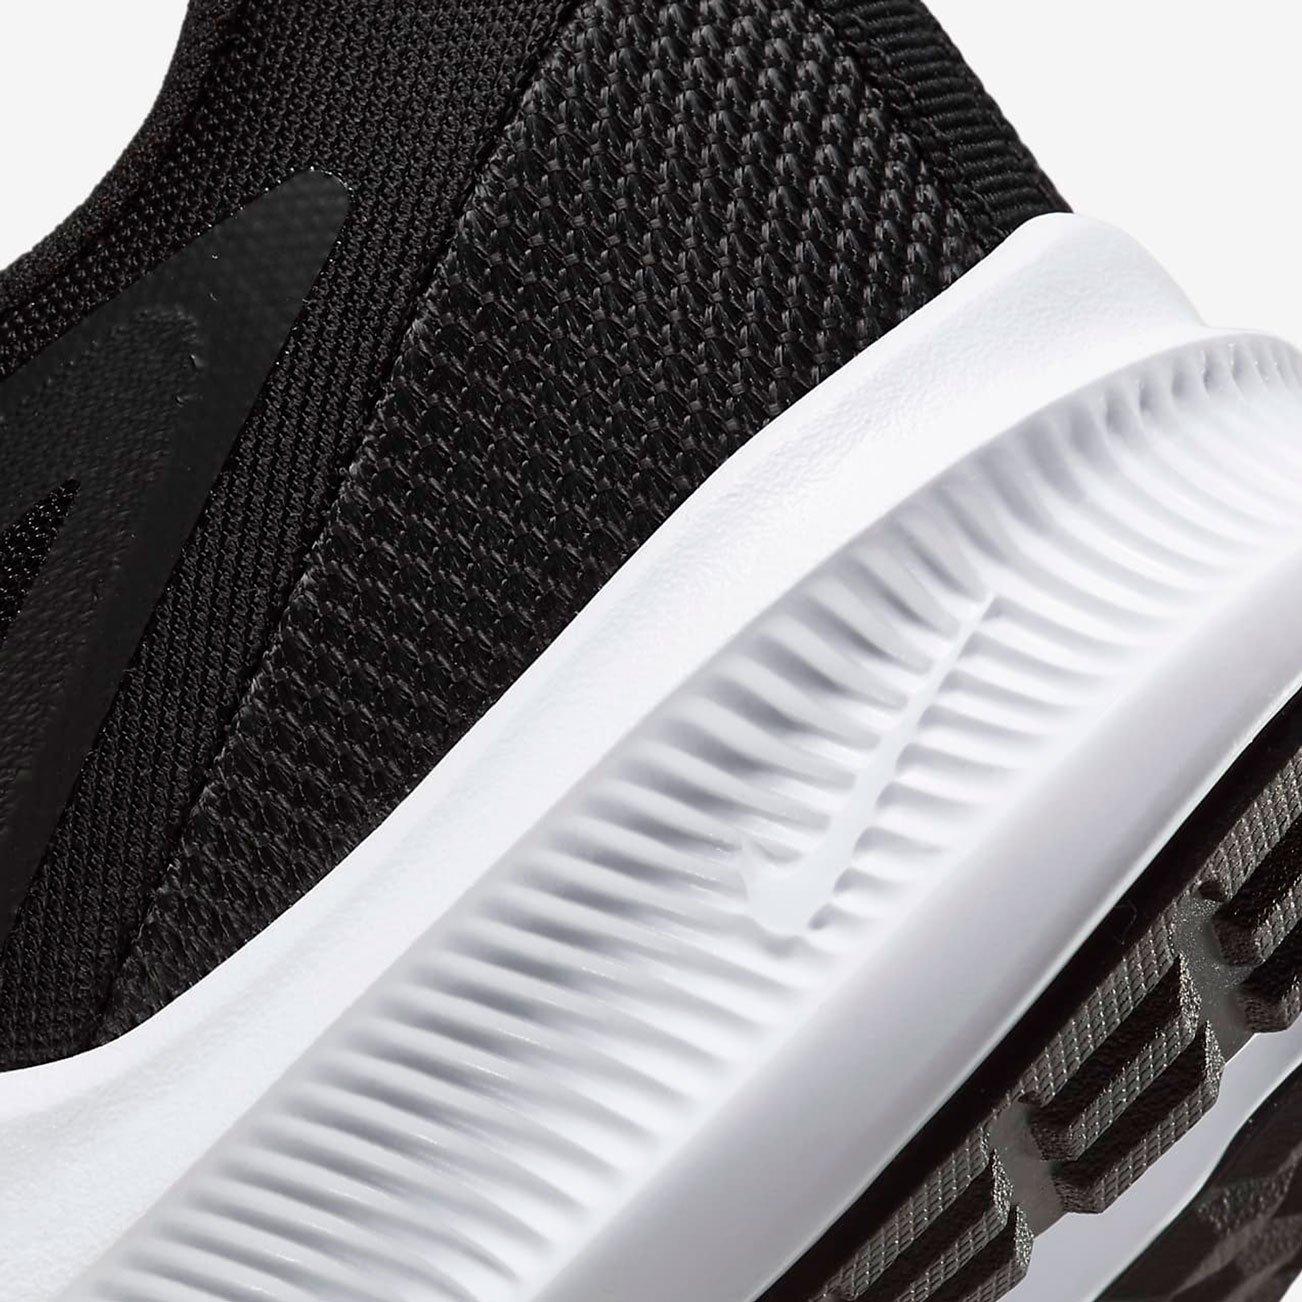 Кроссовки для бега Nike Downshifter 10